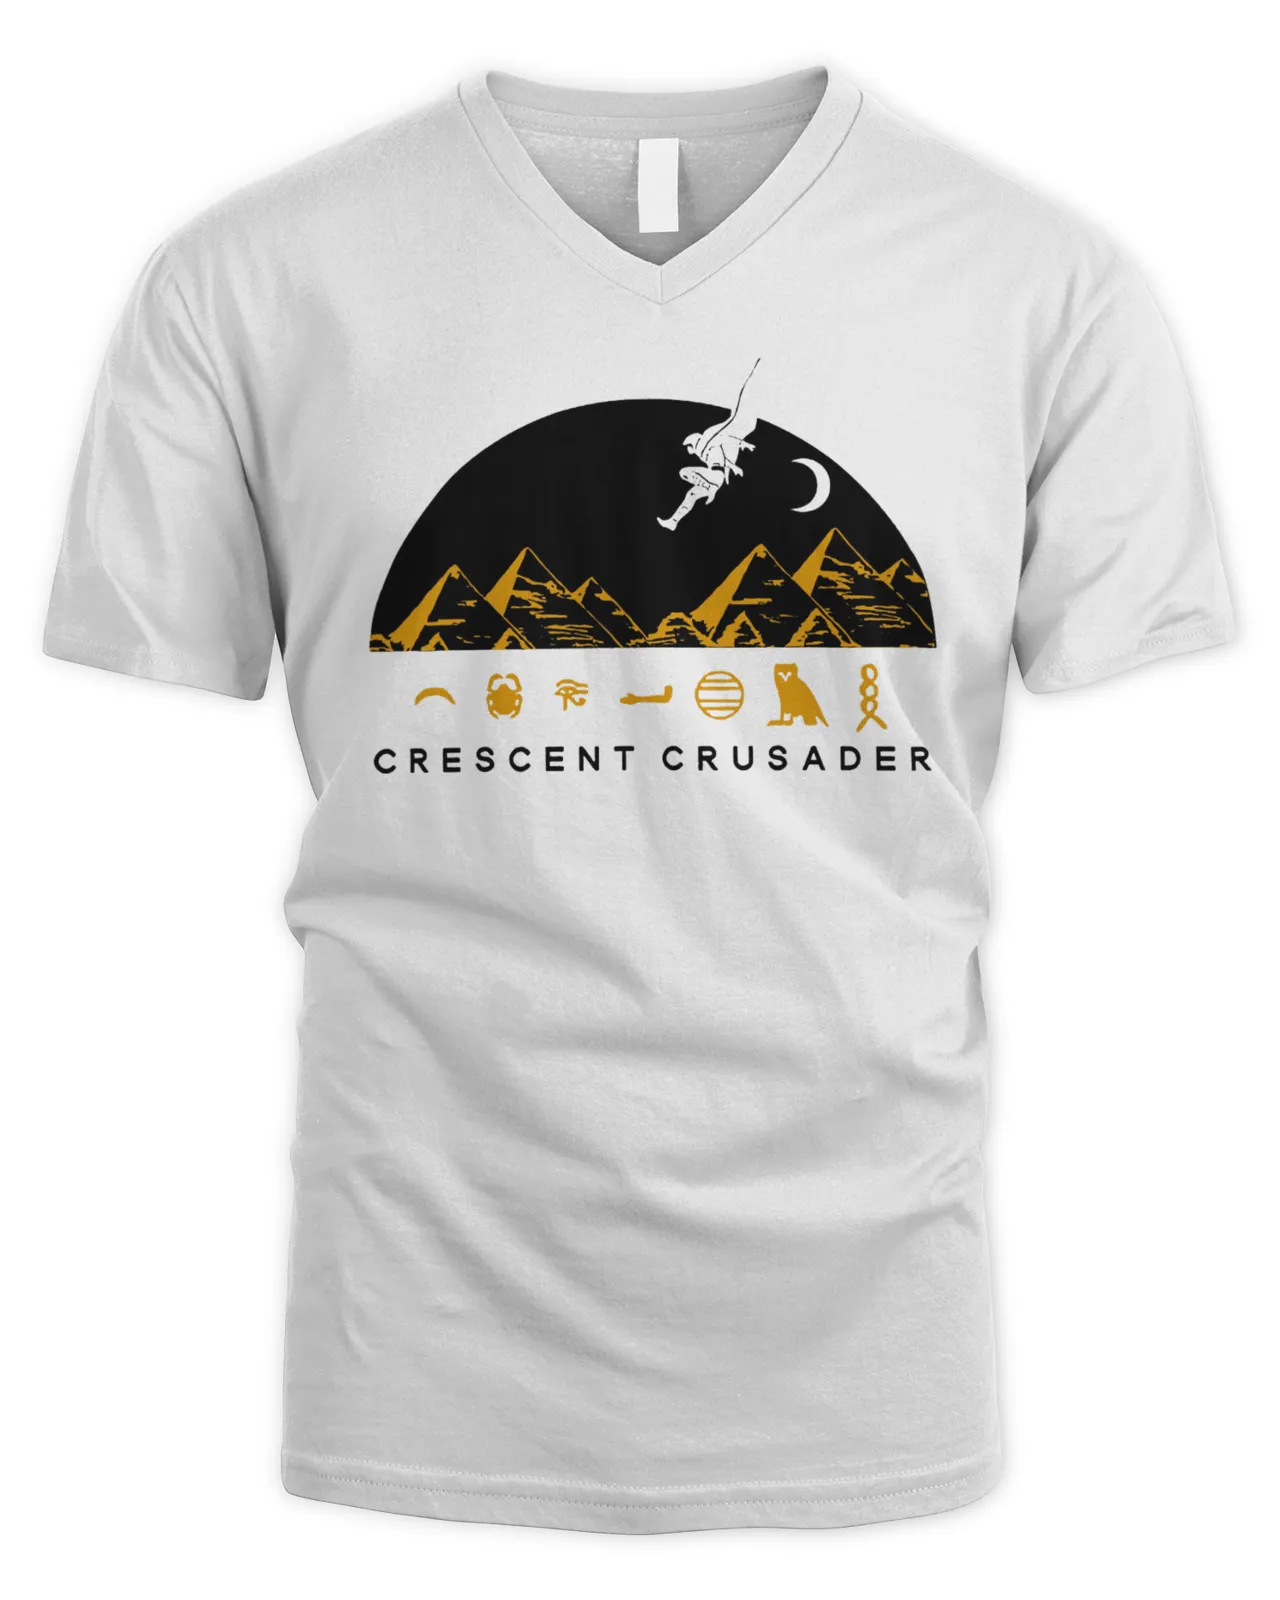 Crusader T-Shirt Unisex Mens